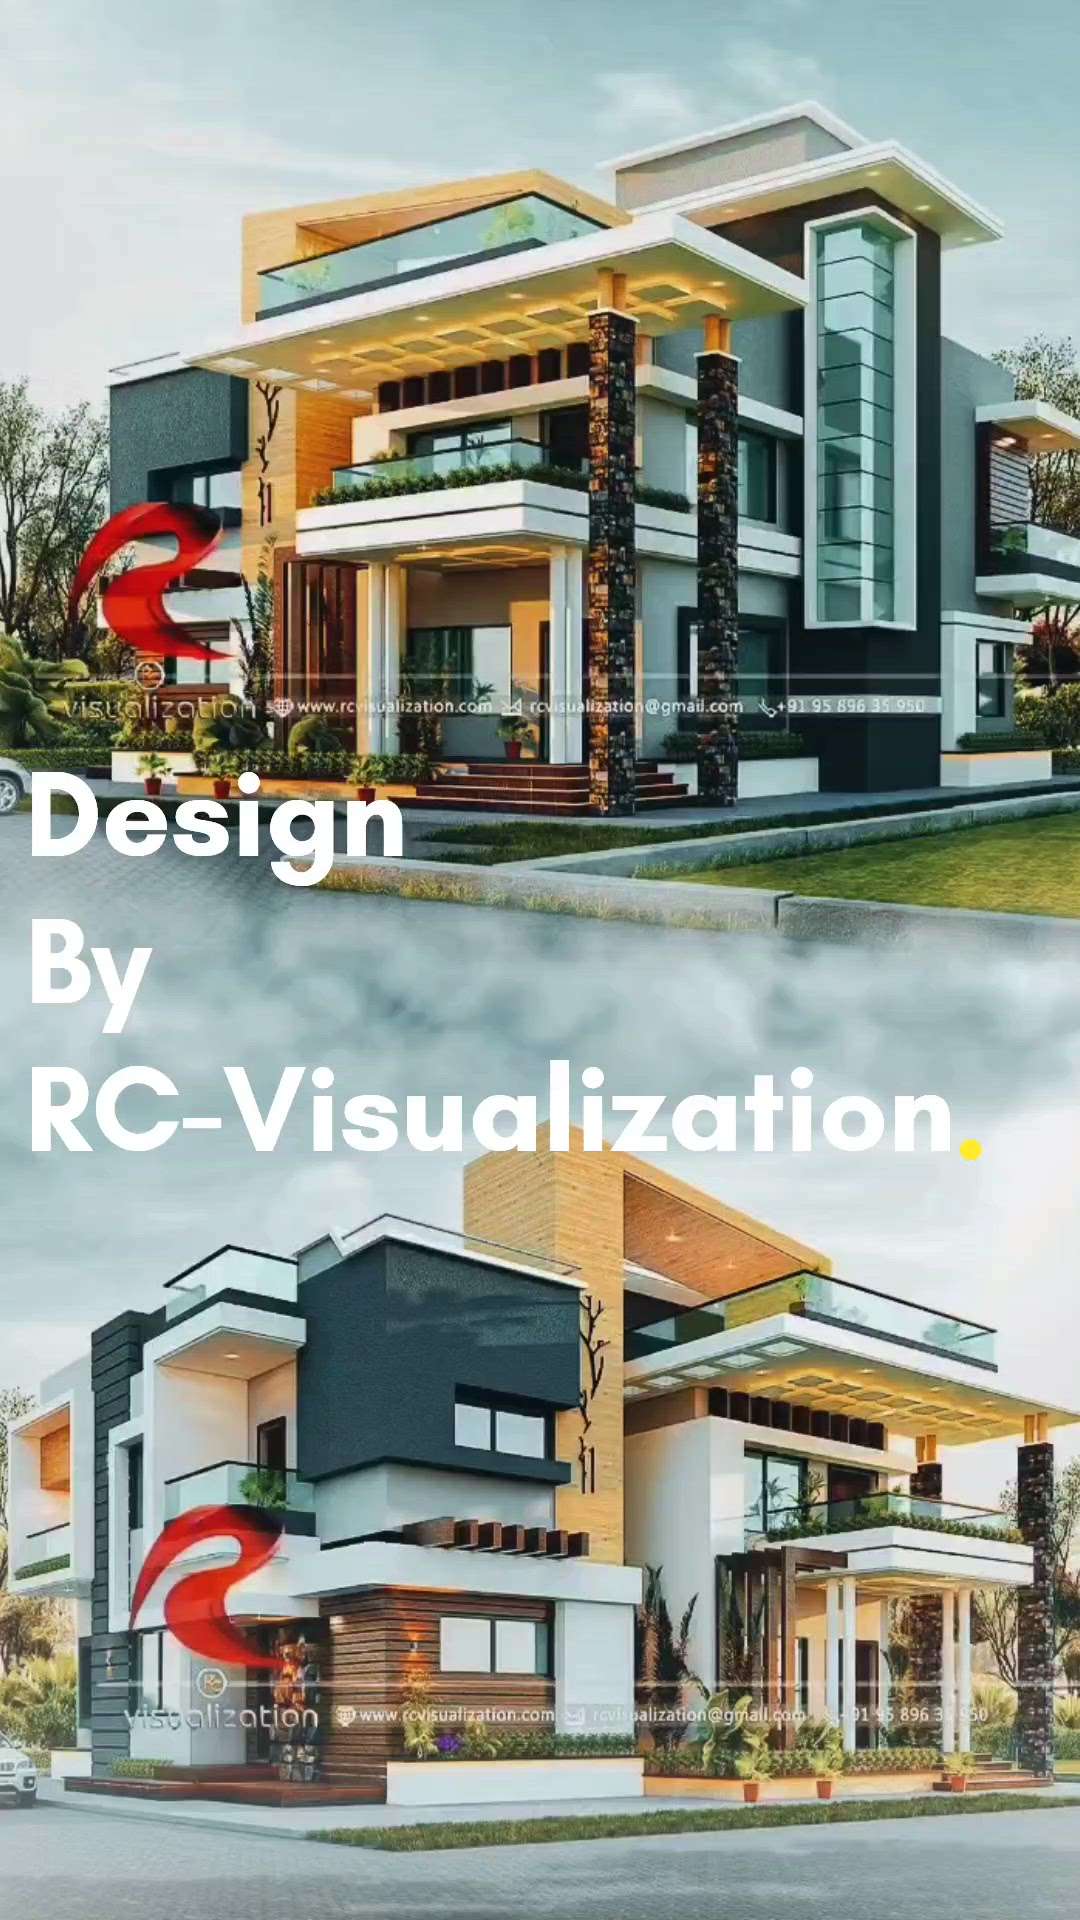 🔱 #rcvisualization #rc #rcv #raghuchoyal #architect #engineer #house design #home #rcthelegend #RC #✨